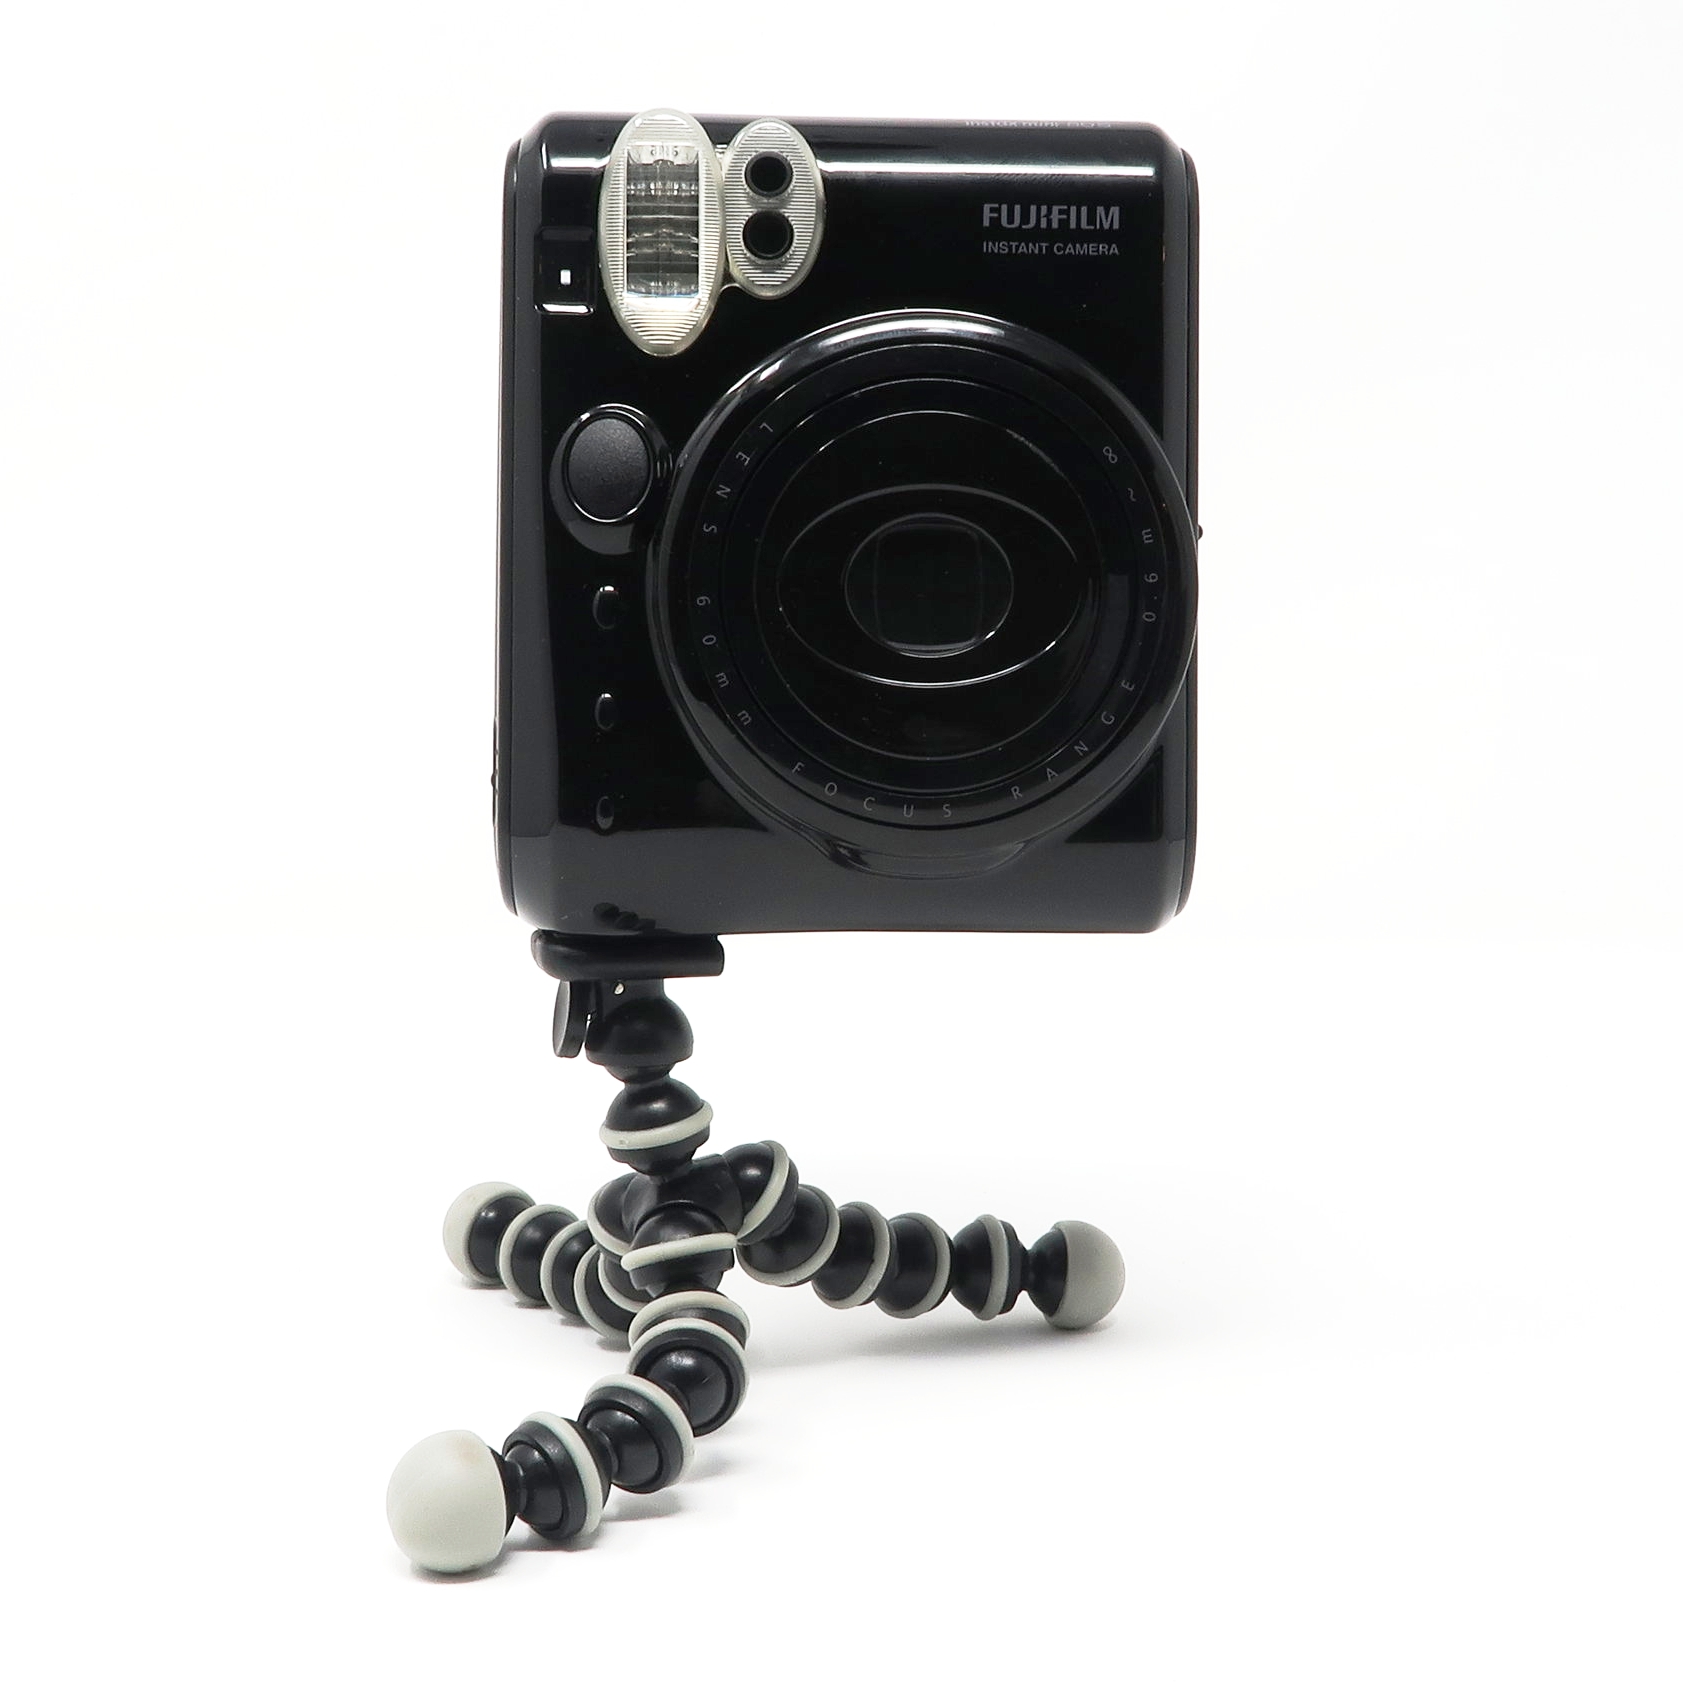 Fujifilm Instax Mini 50S with 4" flexible tripod.